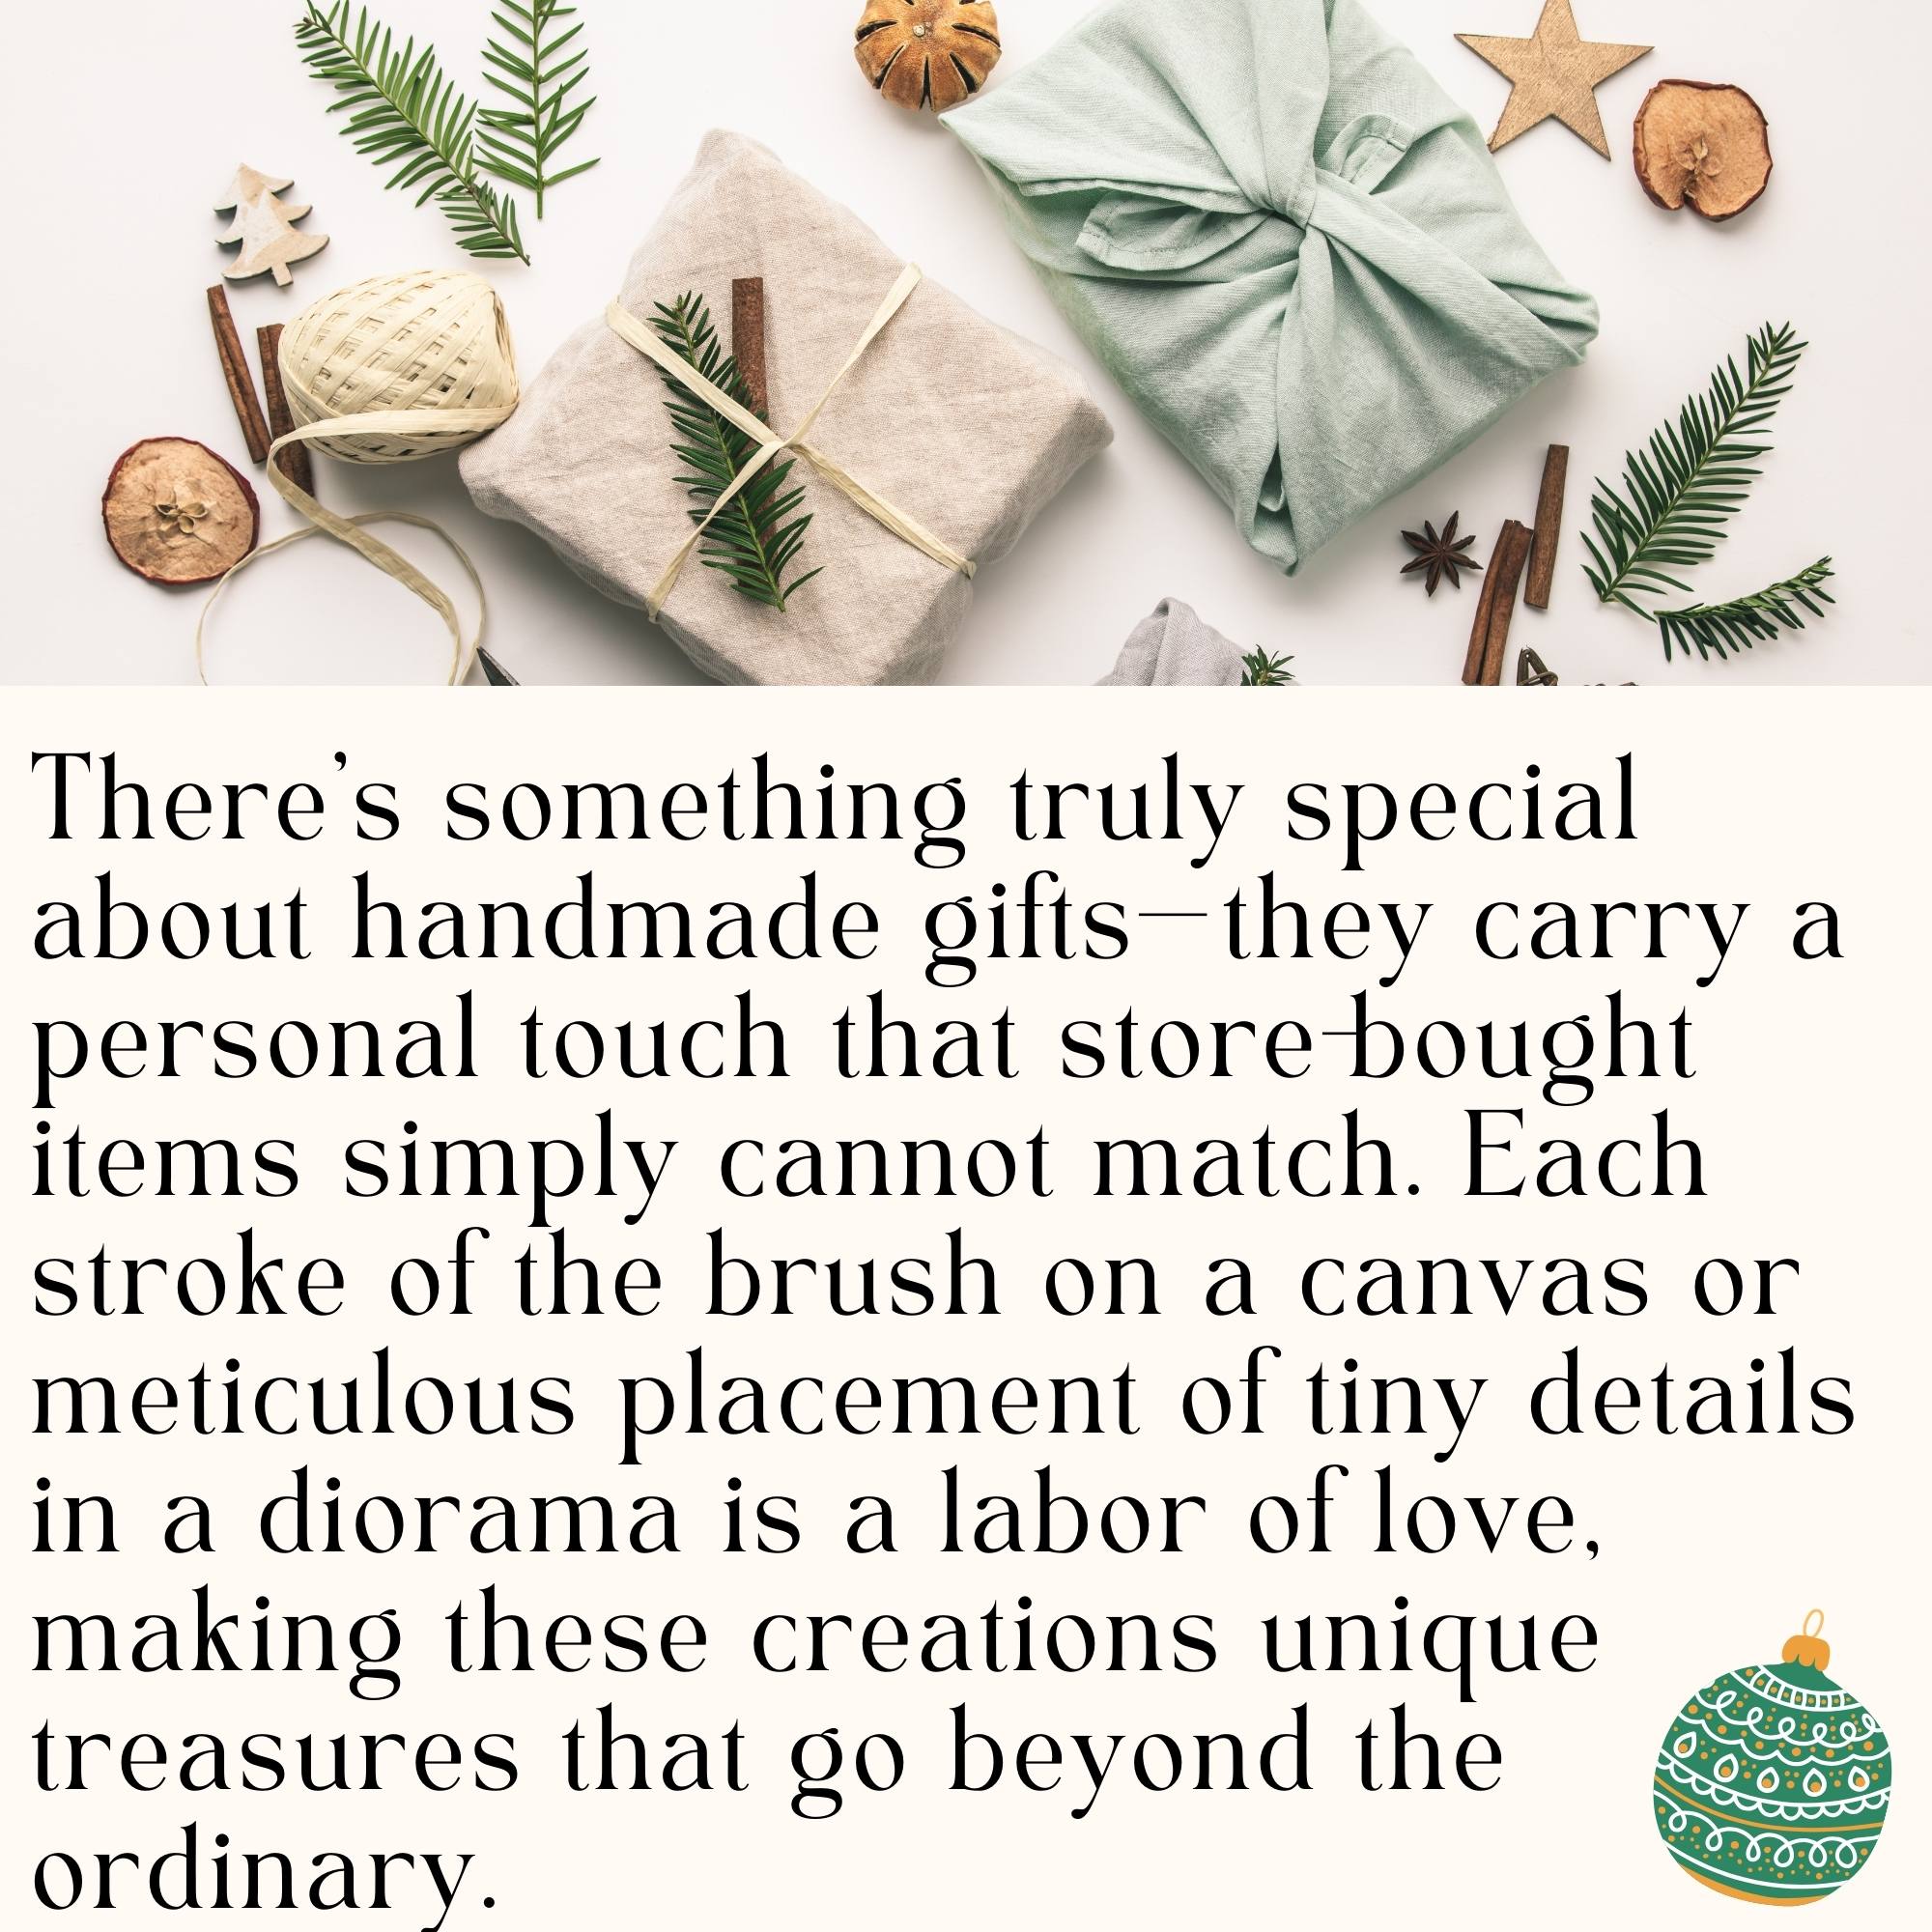 handmade versus mass produces gifts